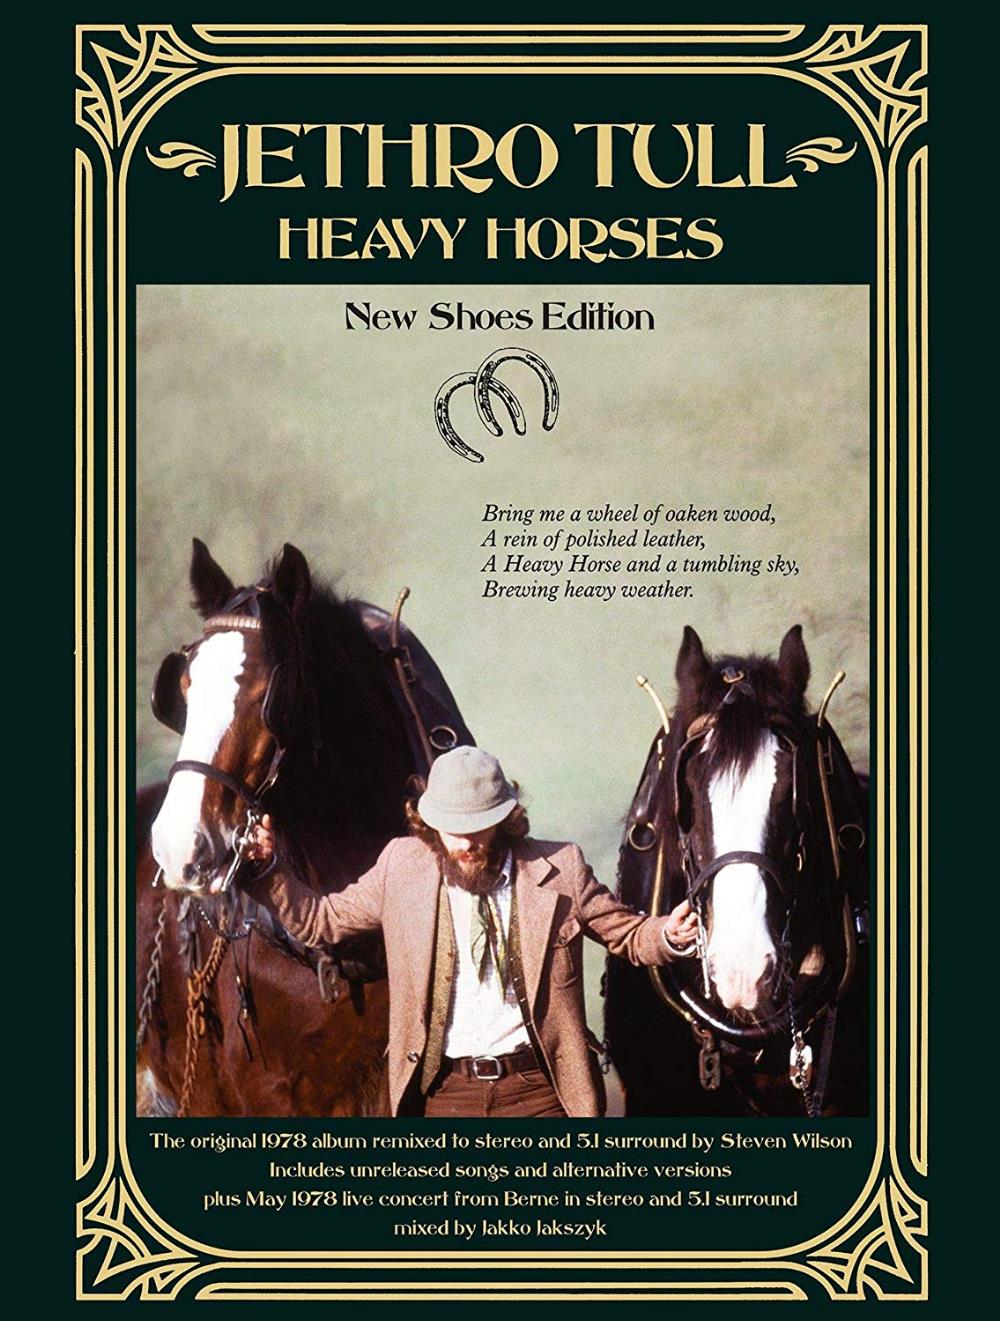 Jethro Tull - Heavy Horses (New Shoes Edition) CD (album) cover